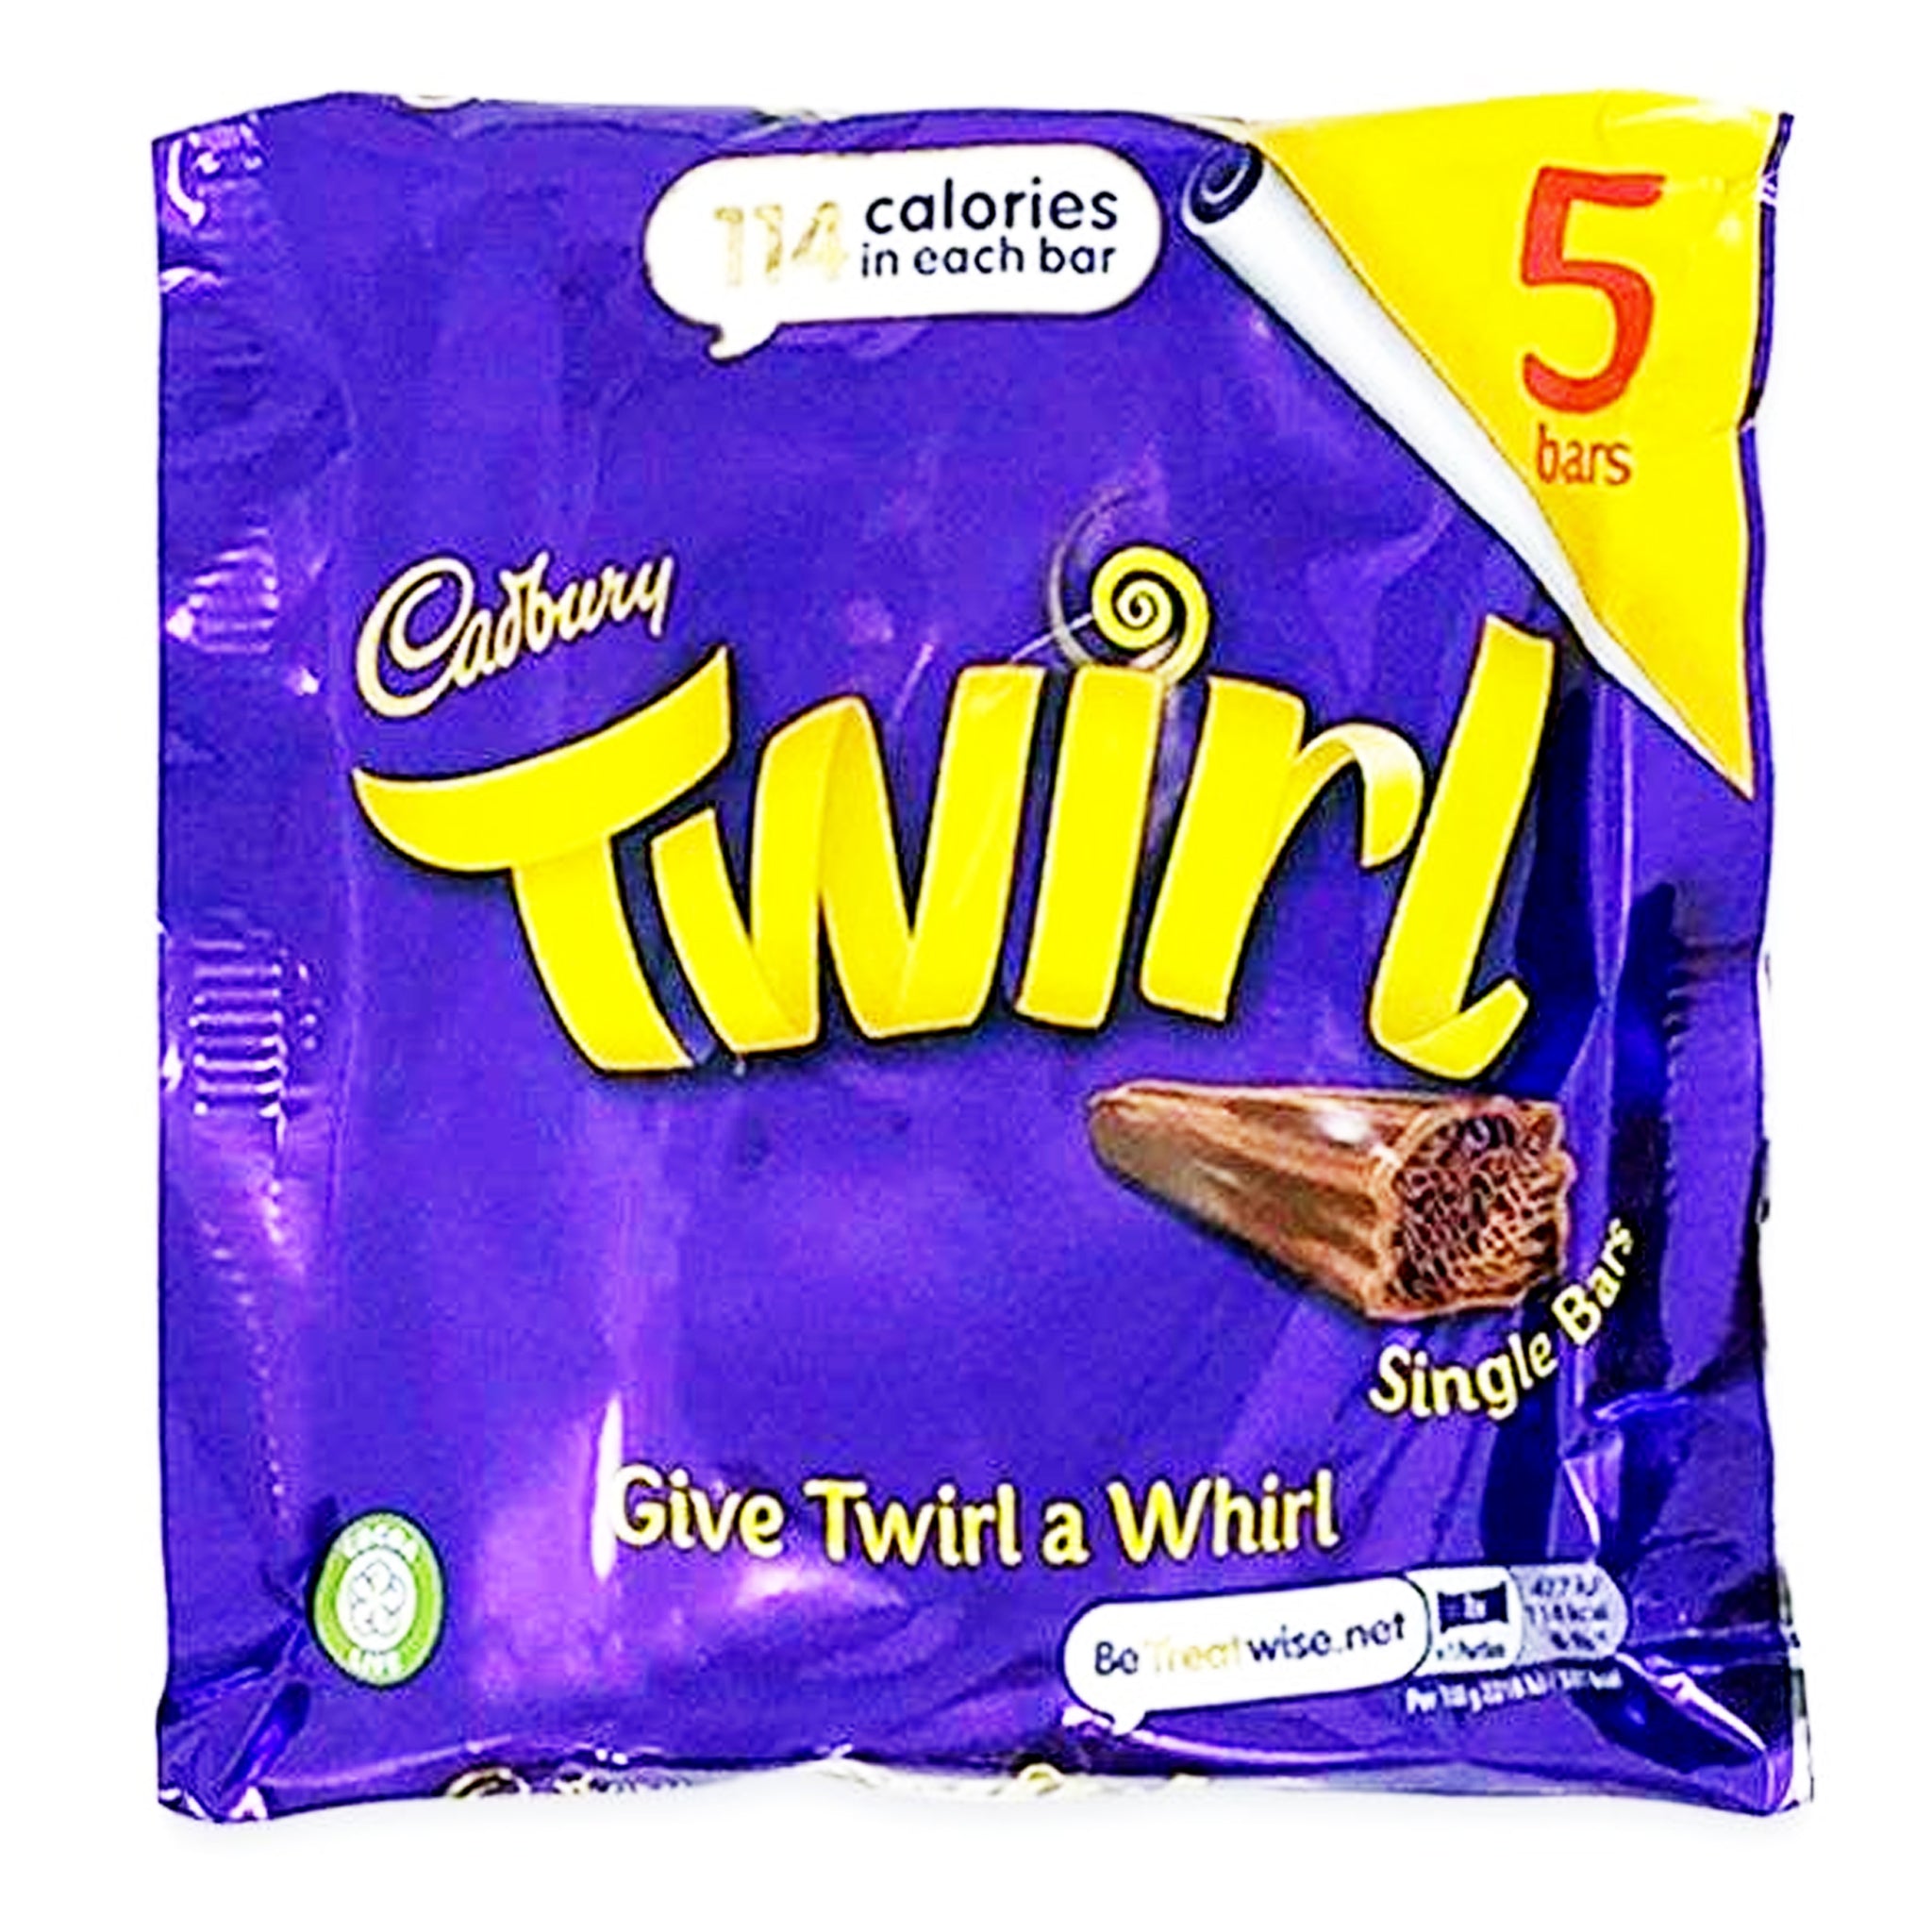 Cadbury Twirl bites חמישיית מקופלת קדבורי